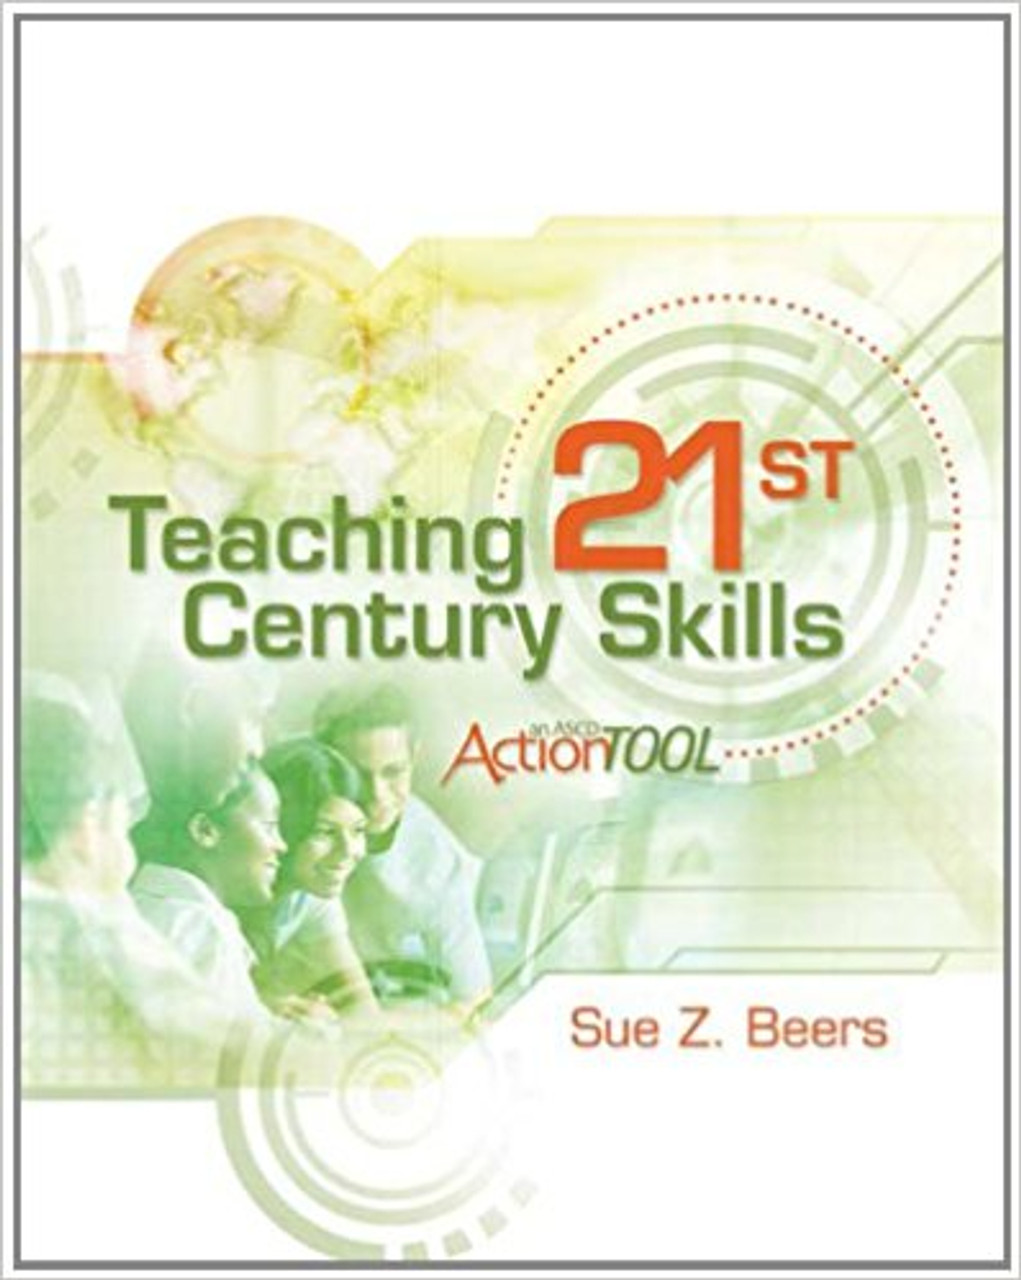 Teaching 21st Century Skills: An ASCD Action Tool